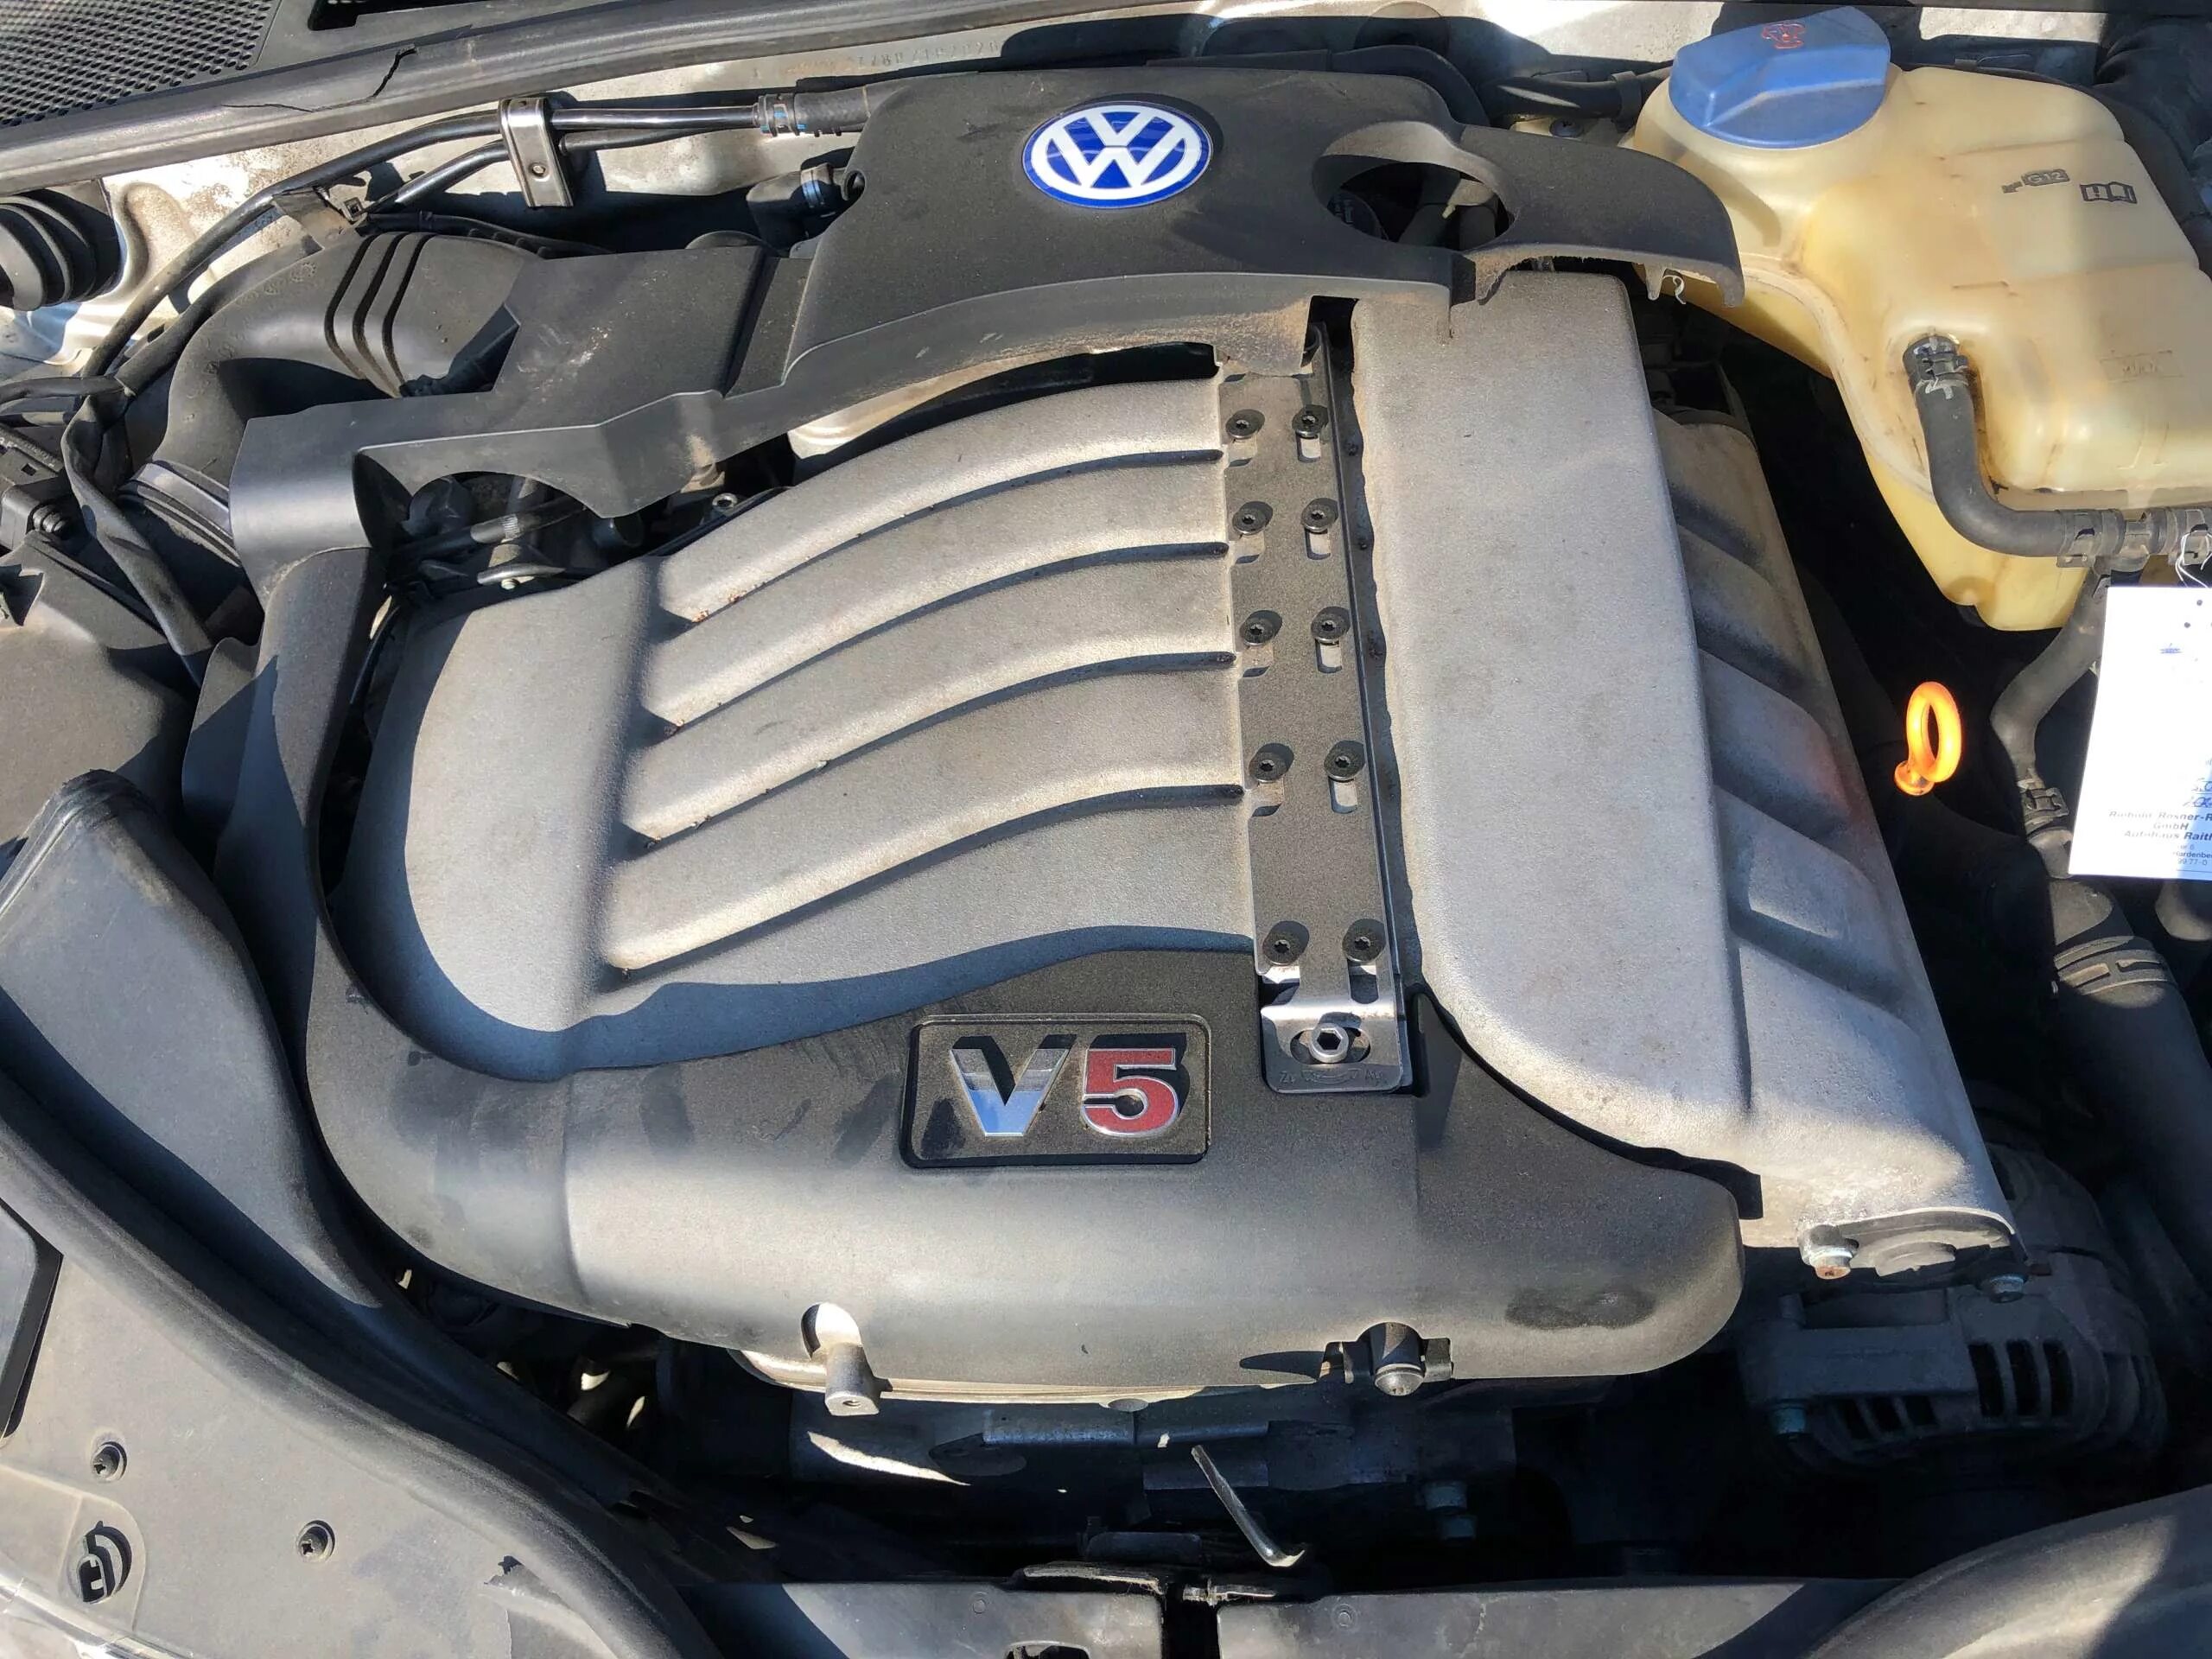 B 5 2b2 5. Volkswagen Passat v5 мотор. VW Passat b5 мотор. Двигатель VW Passat b5 2.3. Volkswagen 2.3 v5 мотор.